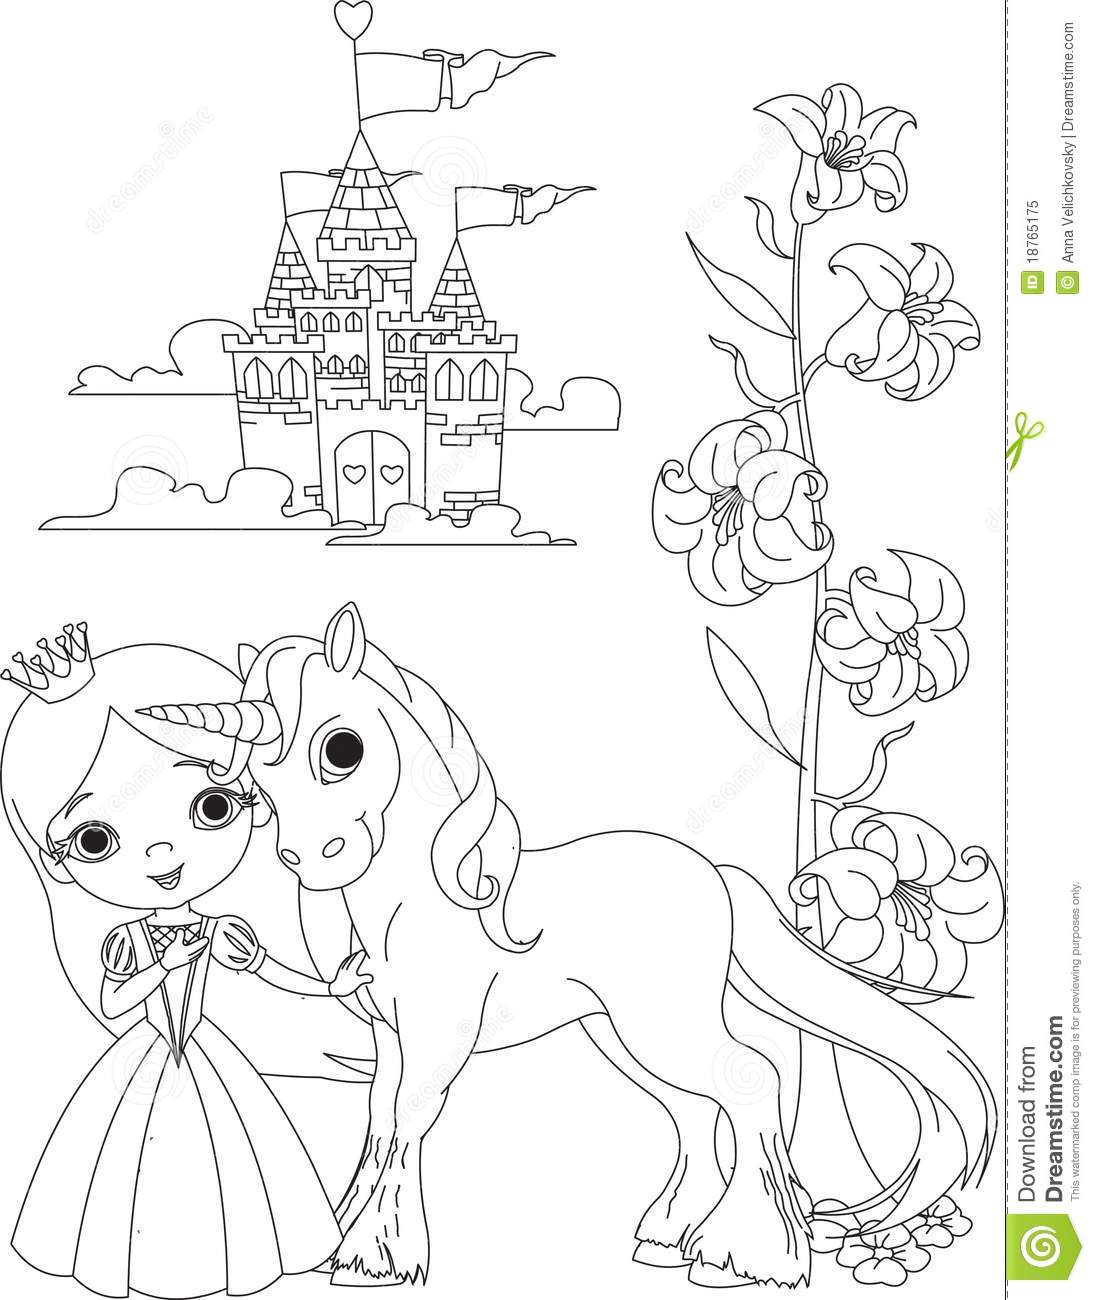 coloriage licorne et princesse à imprimer de la catégorie coloriage licorne